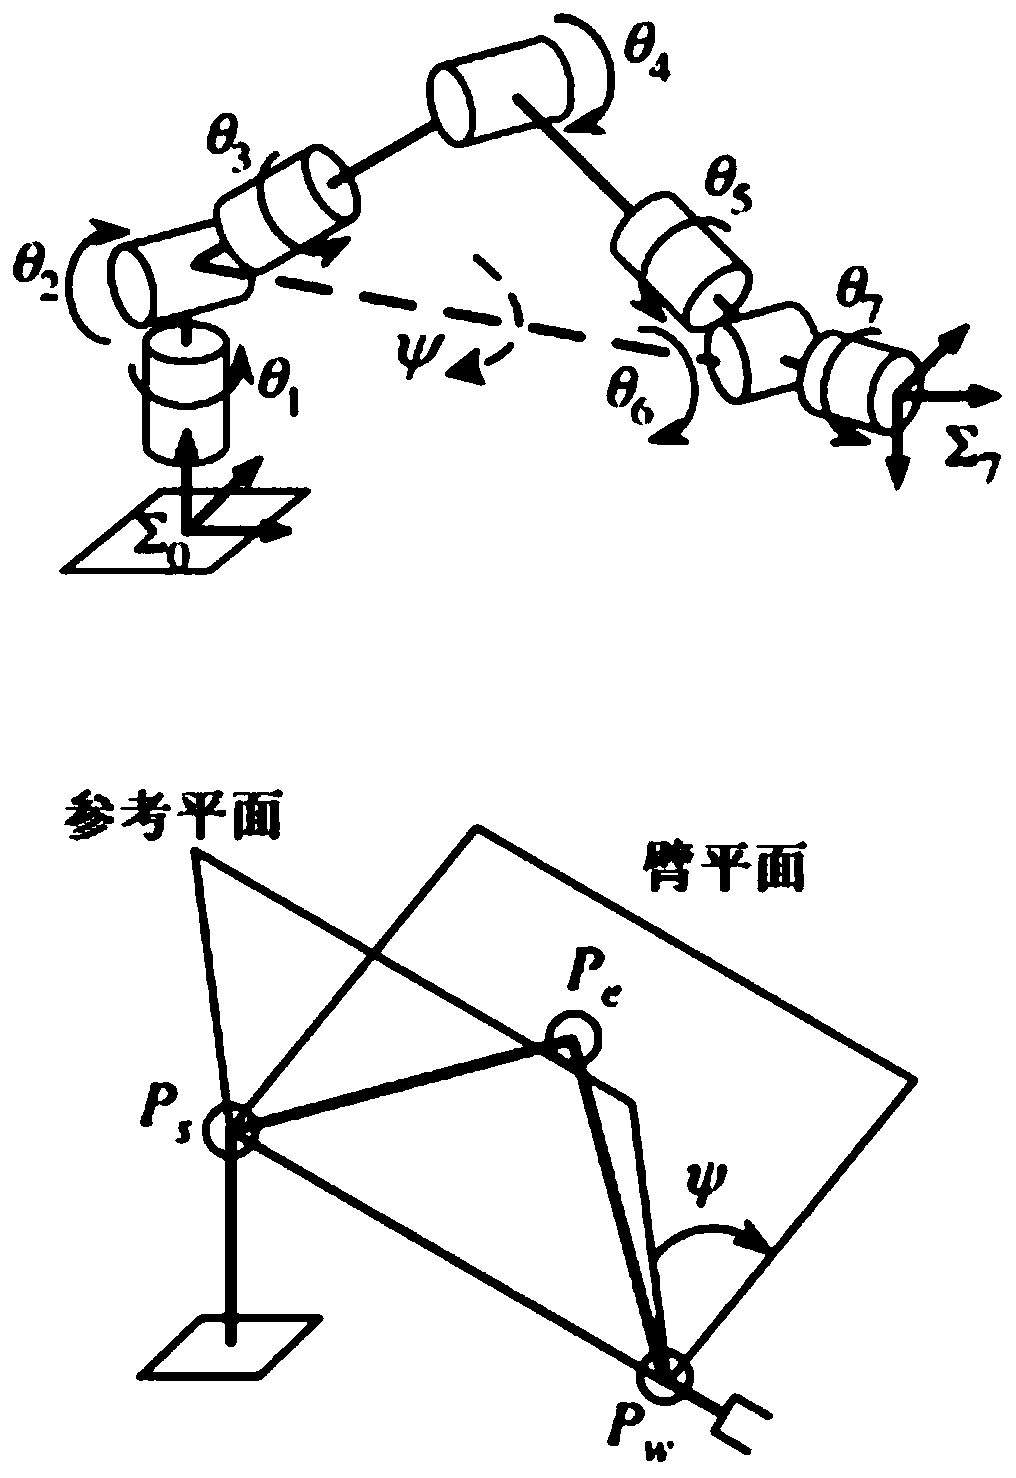 Seven-degree-of-freedom redundancy mechanical arm task constraint path planning method under Descartes space